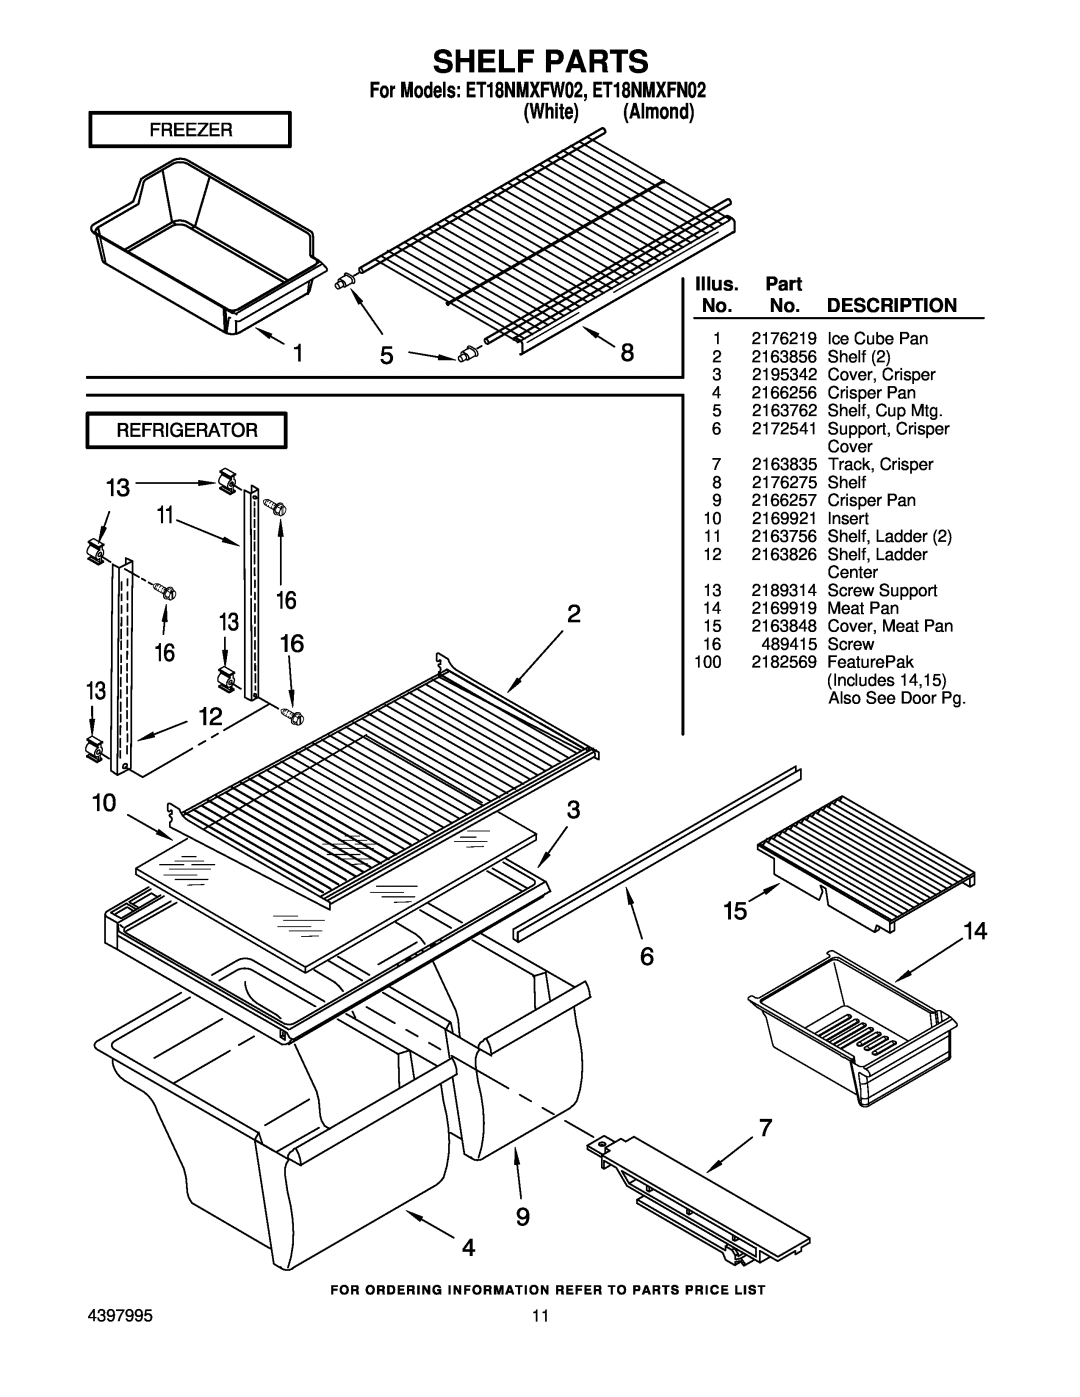 Whirlpool manual Shelf Parts, For Models ET18NMXFW02, ET18NMXFN02 White Almond 